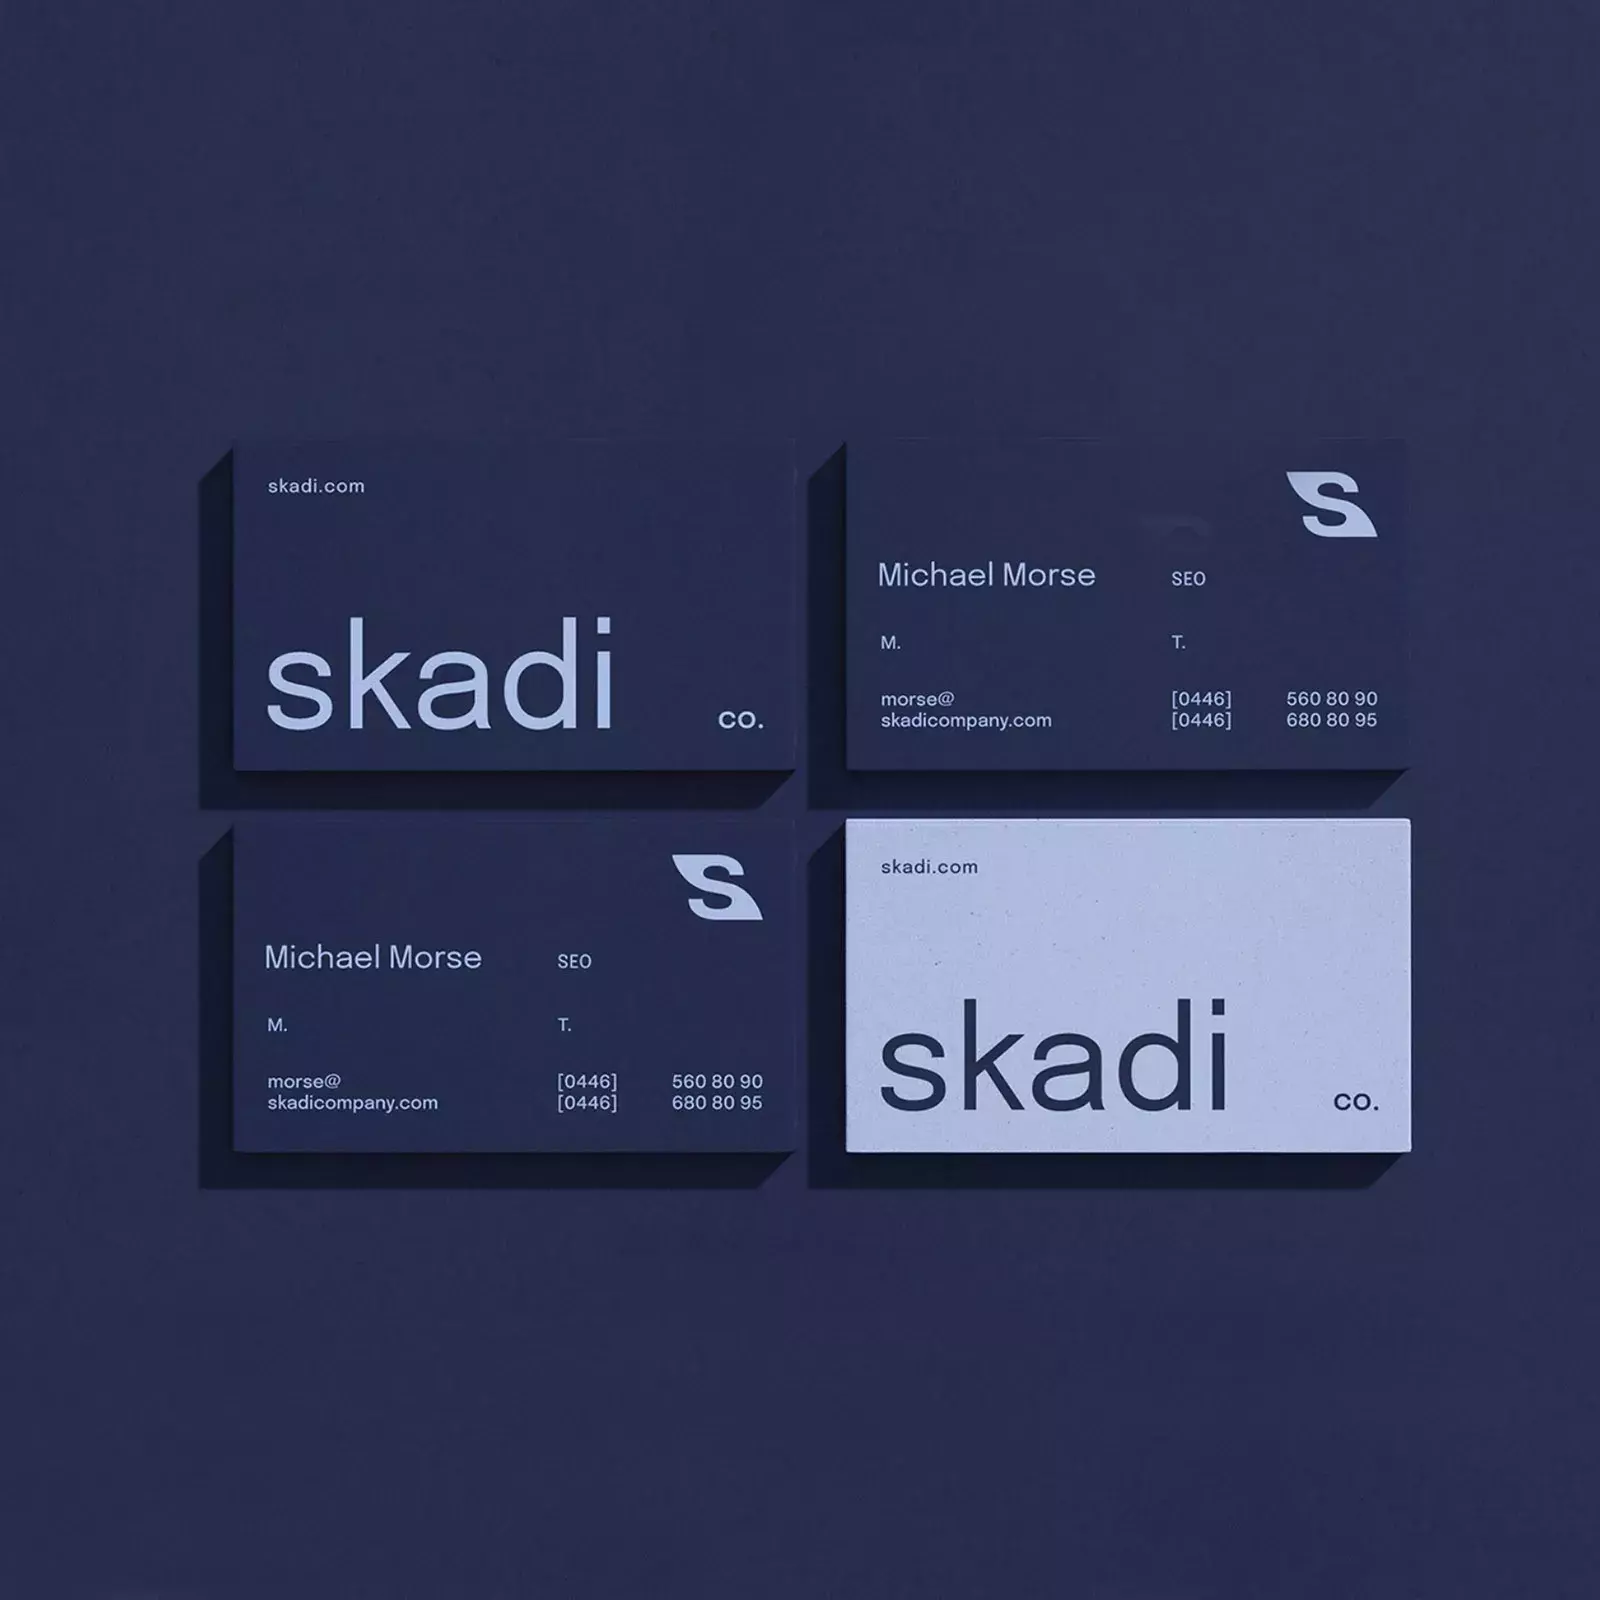 Skadi co. — Fishing company branding & visual identity